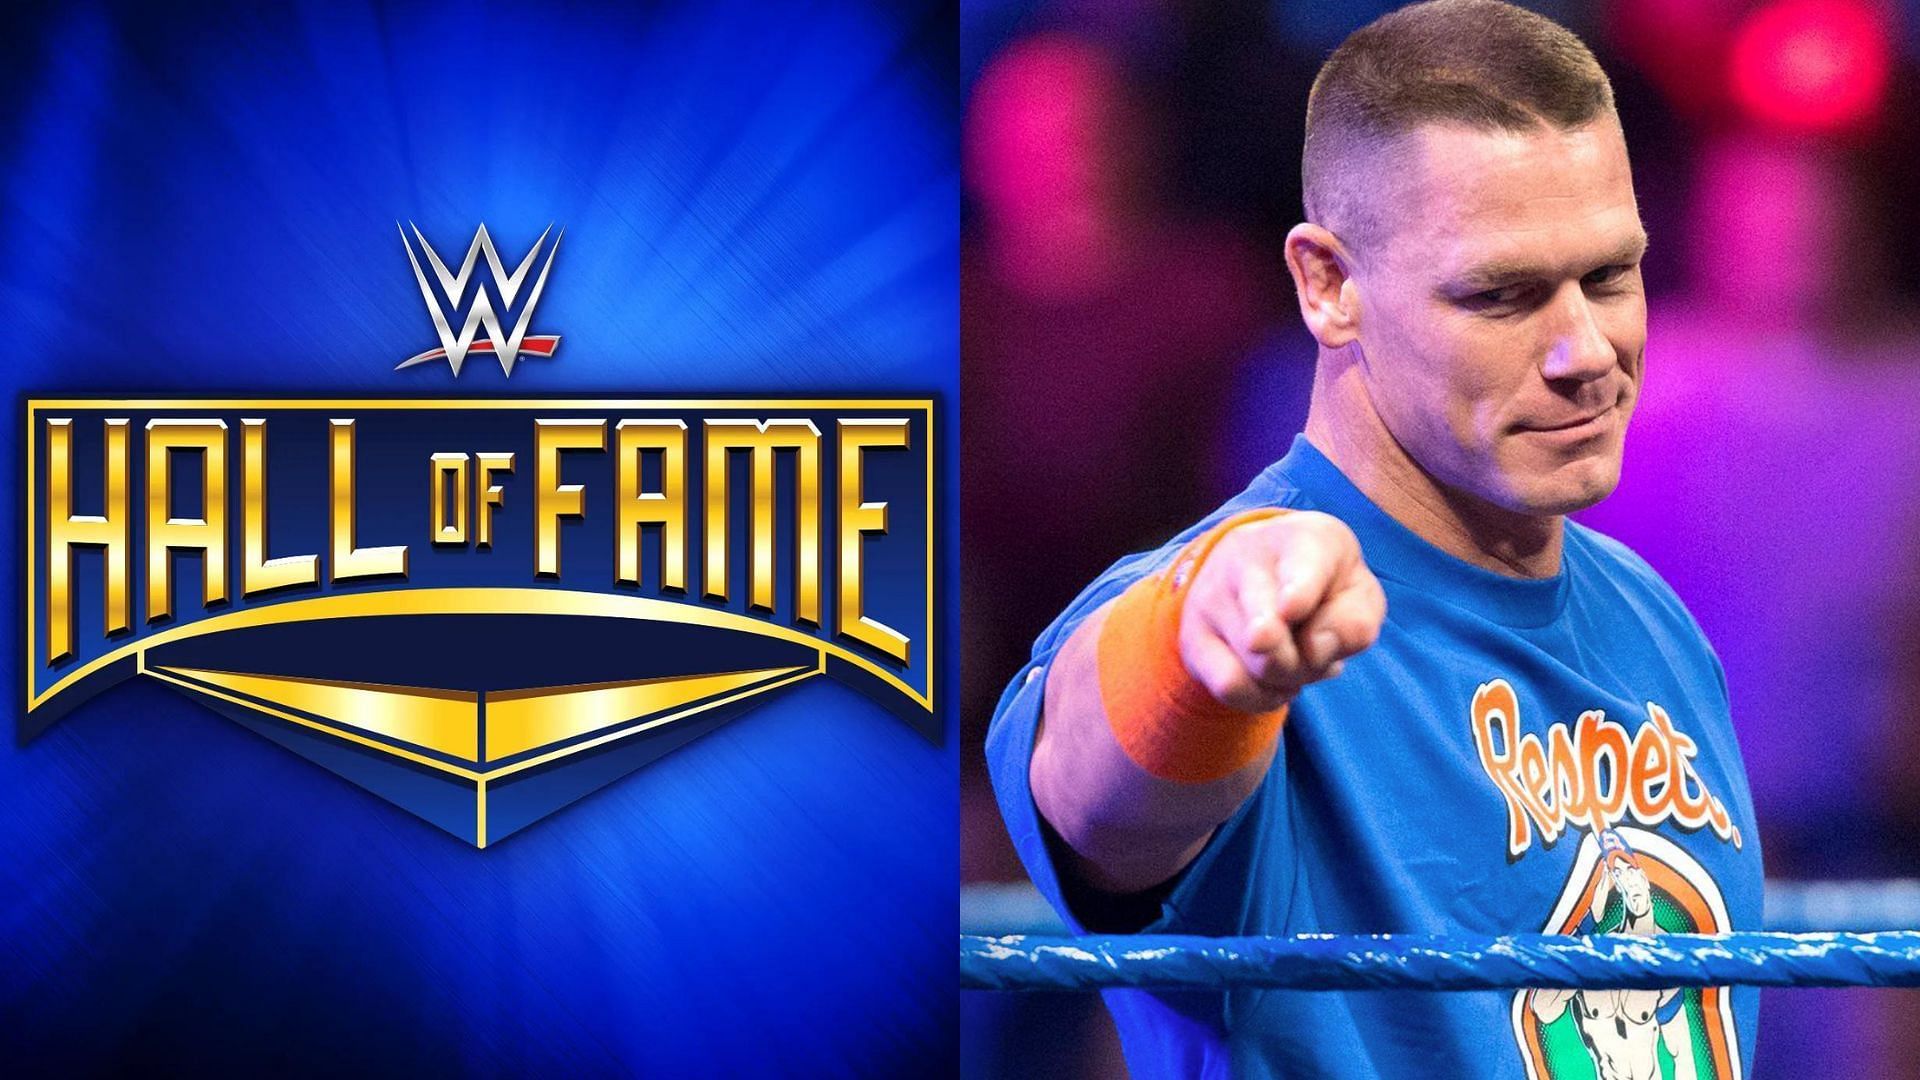 John Cena will be returning to the company on SmackDown.